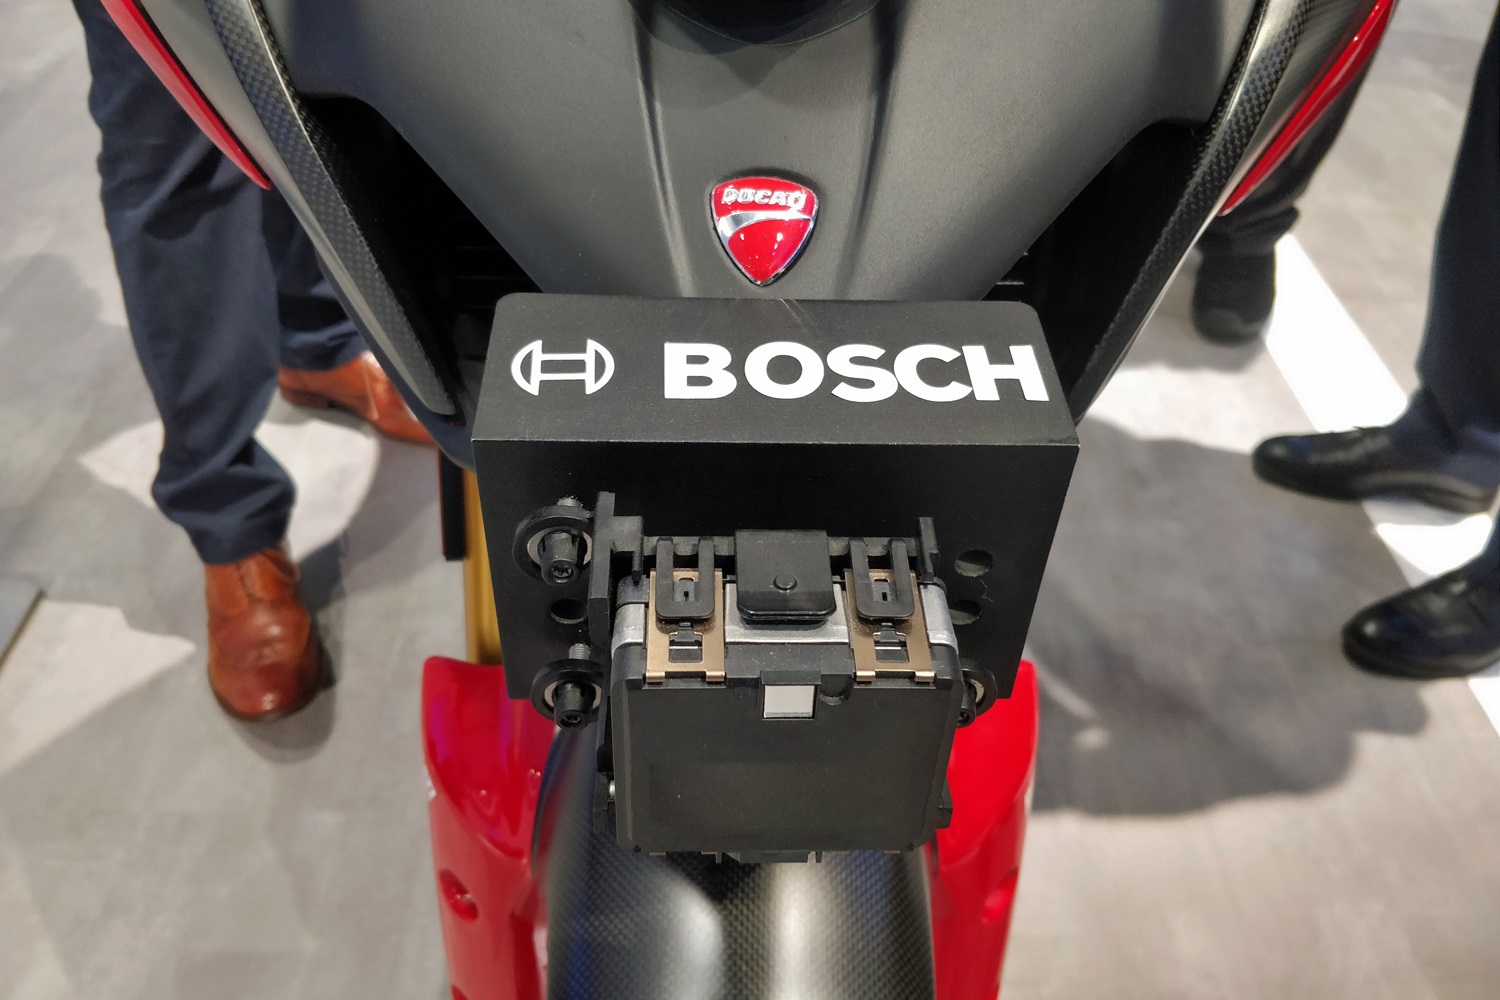 Bosch Sensor for motorcycles